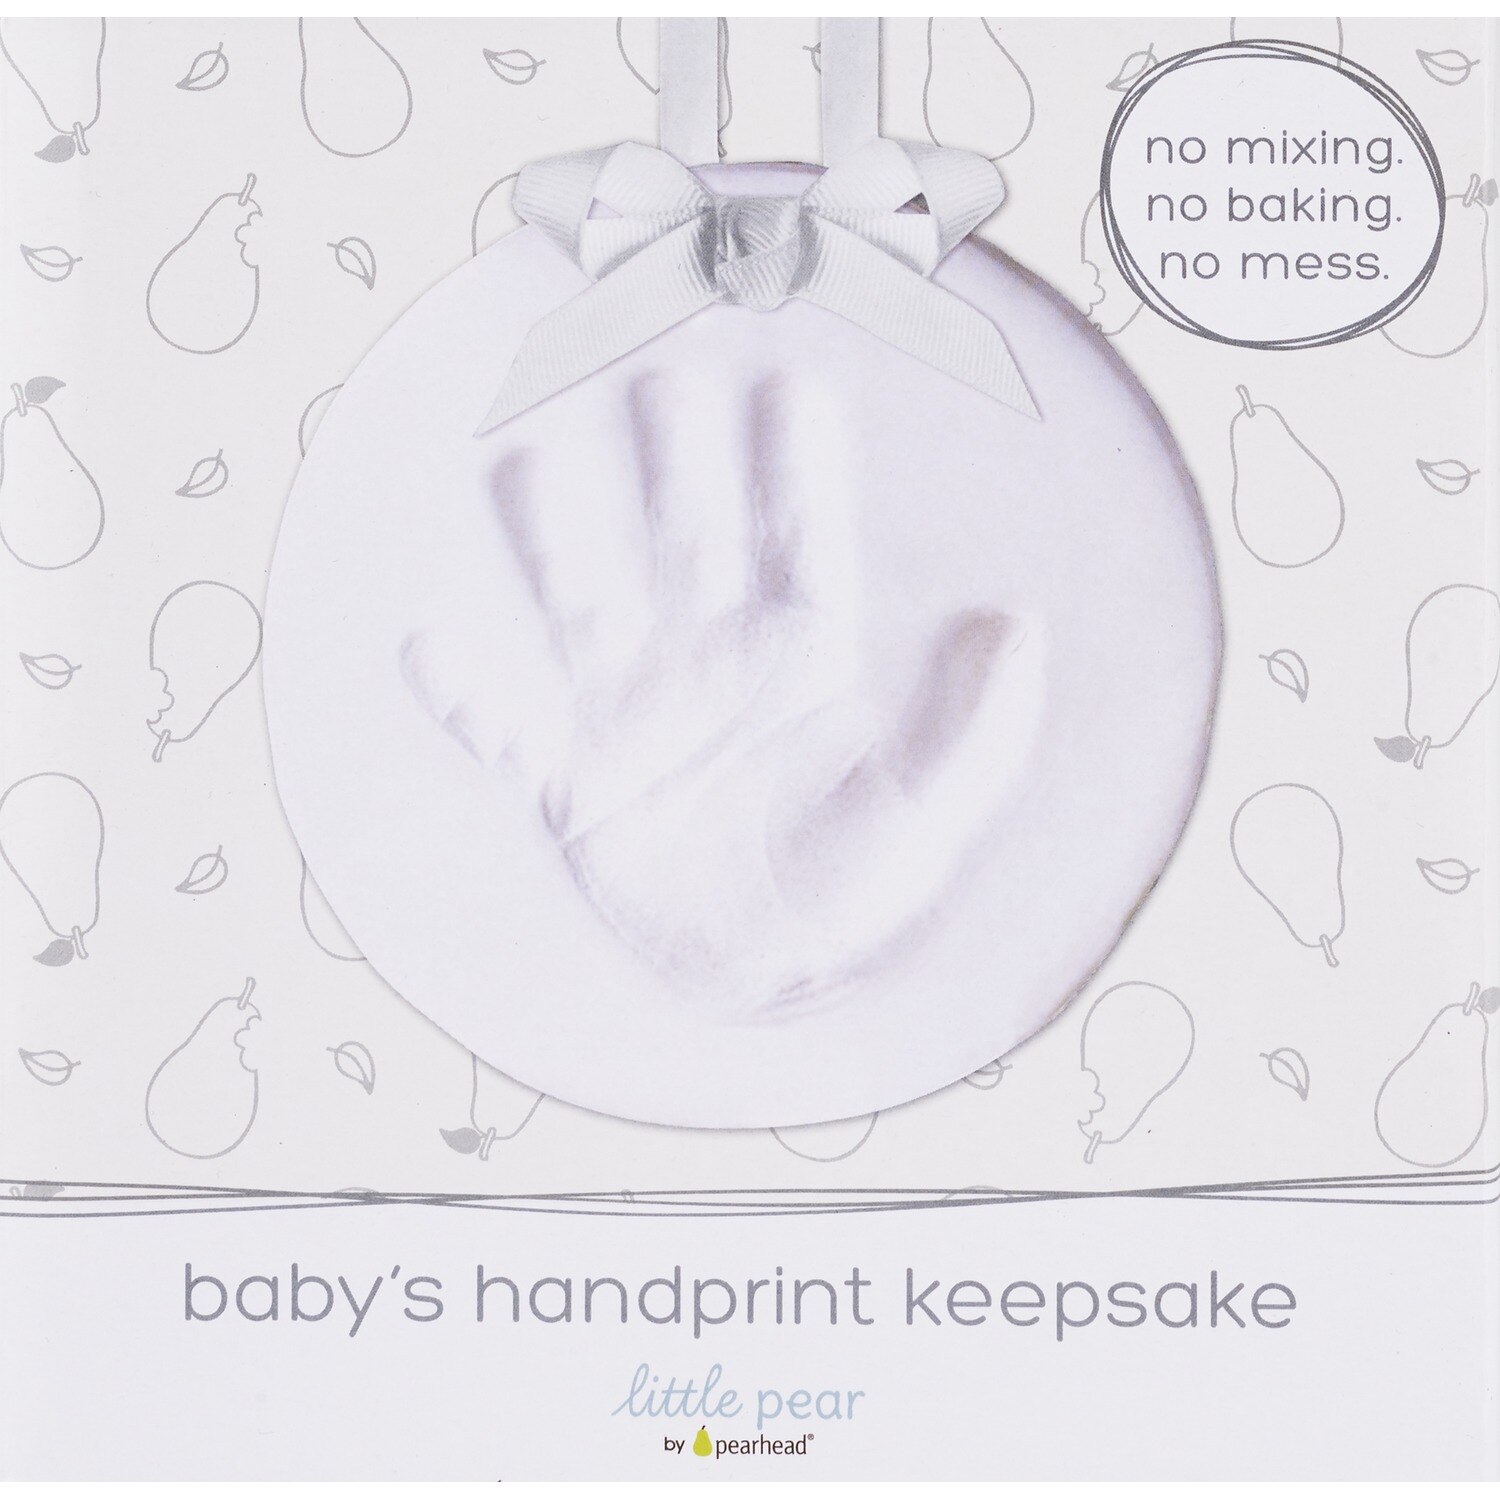 Little Pear Baby's Handprint Keepsake, 1 CT